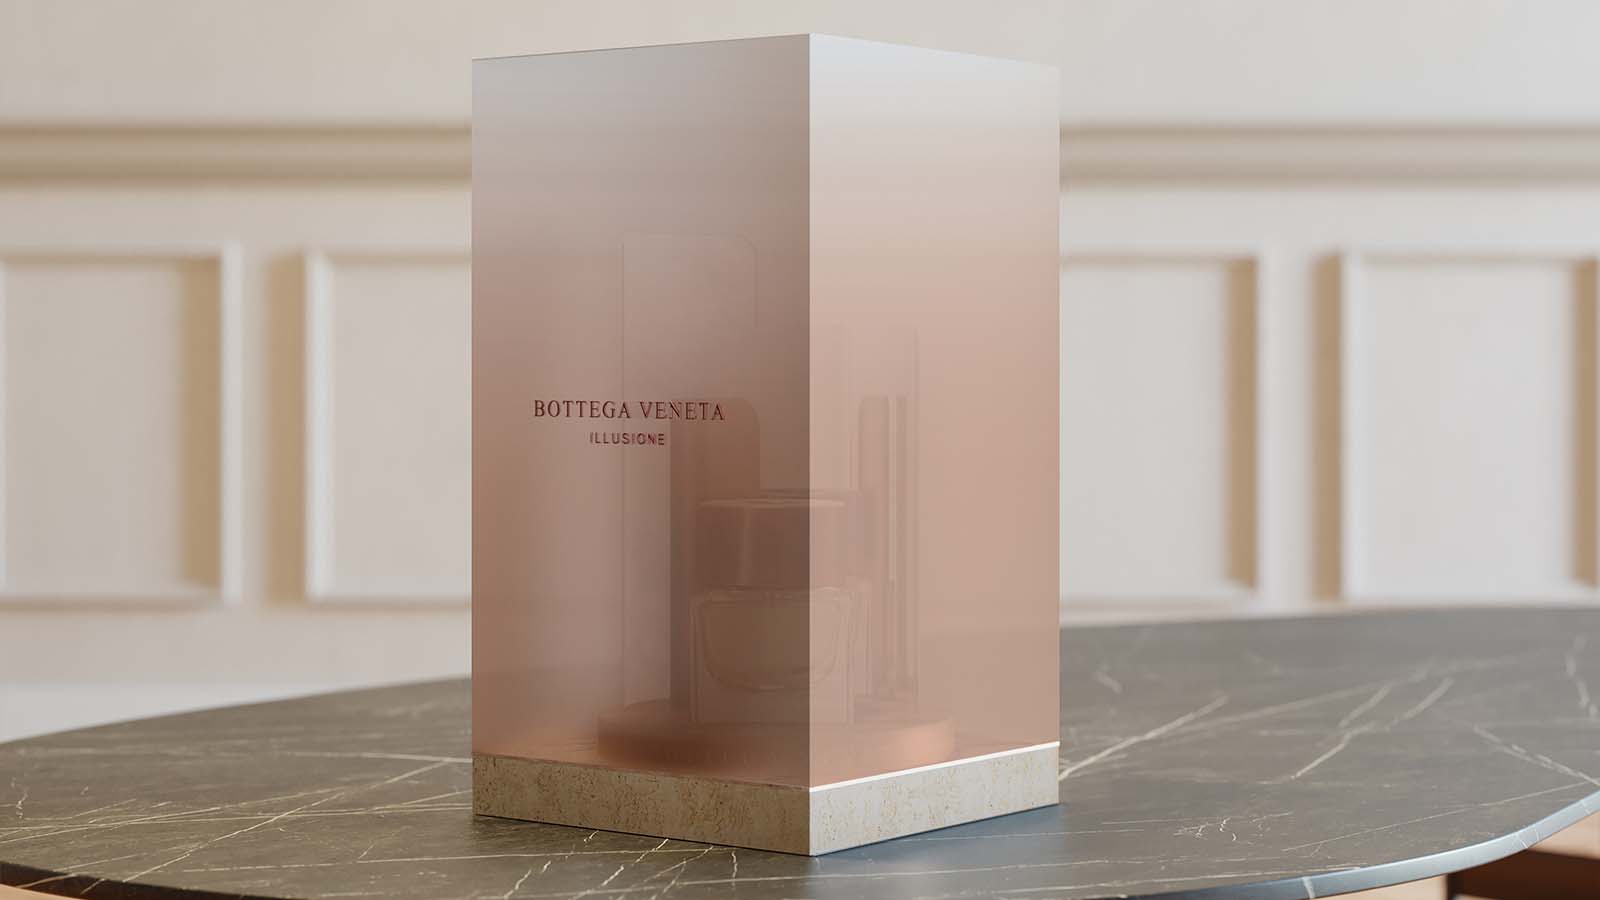 Bottega Veneta perfume placed in the studio virtual Space